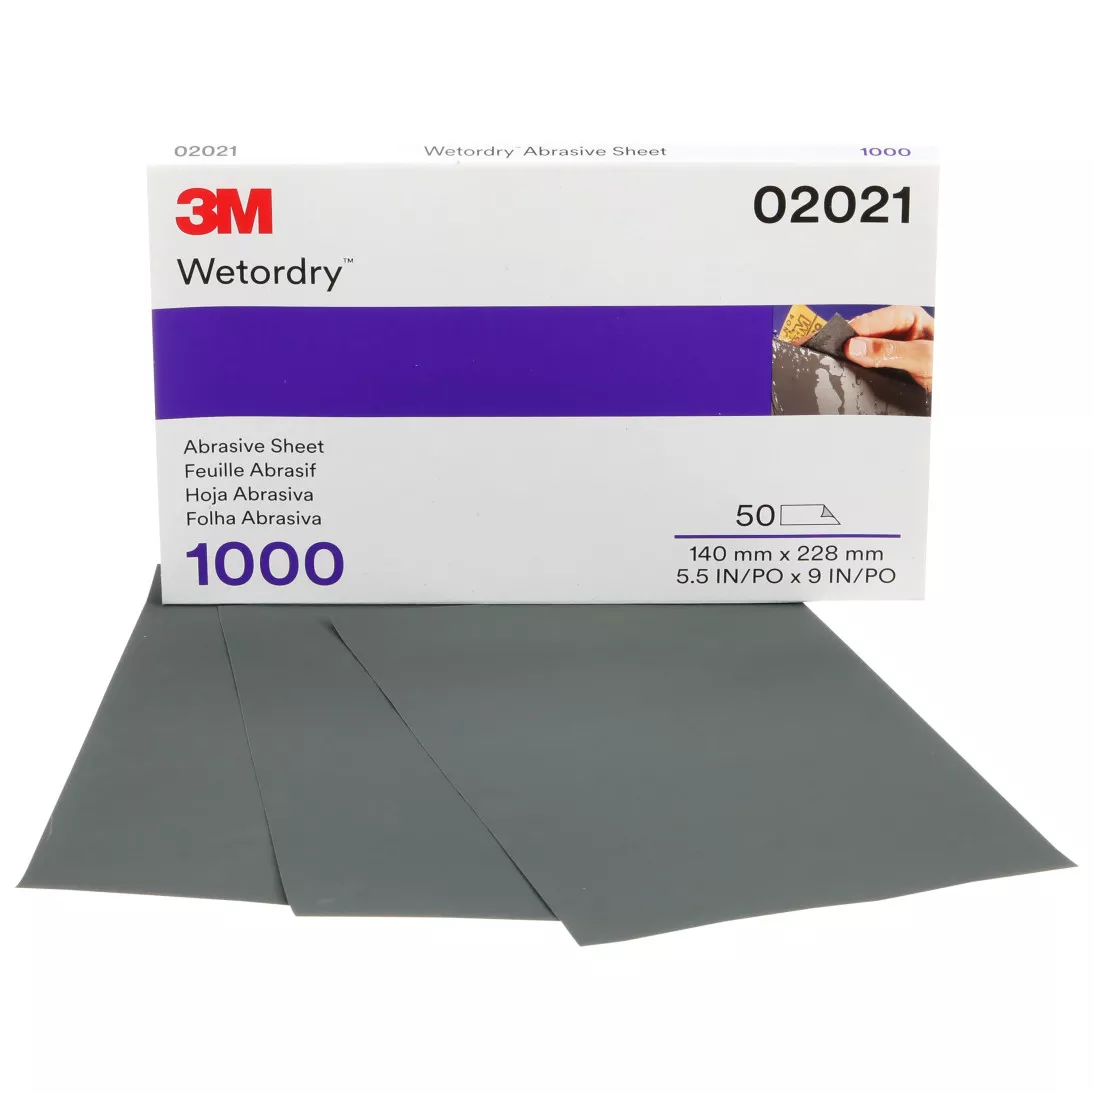 3M™ Wetordry™ Abrasive Sheet 401Q, 02021, 1000, 5 1/2 in x 9 in, 50
sheets per carton, 5 cartons per case